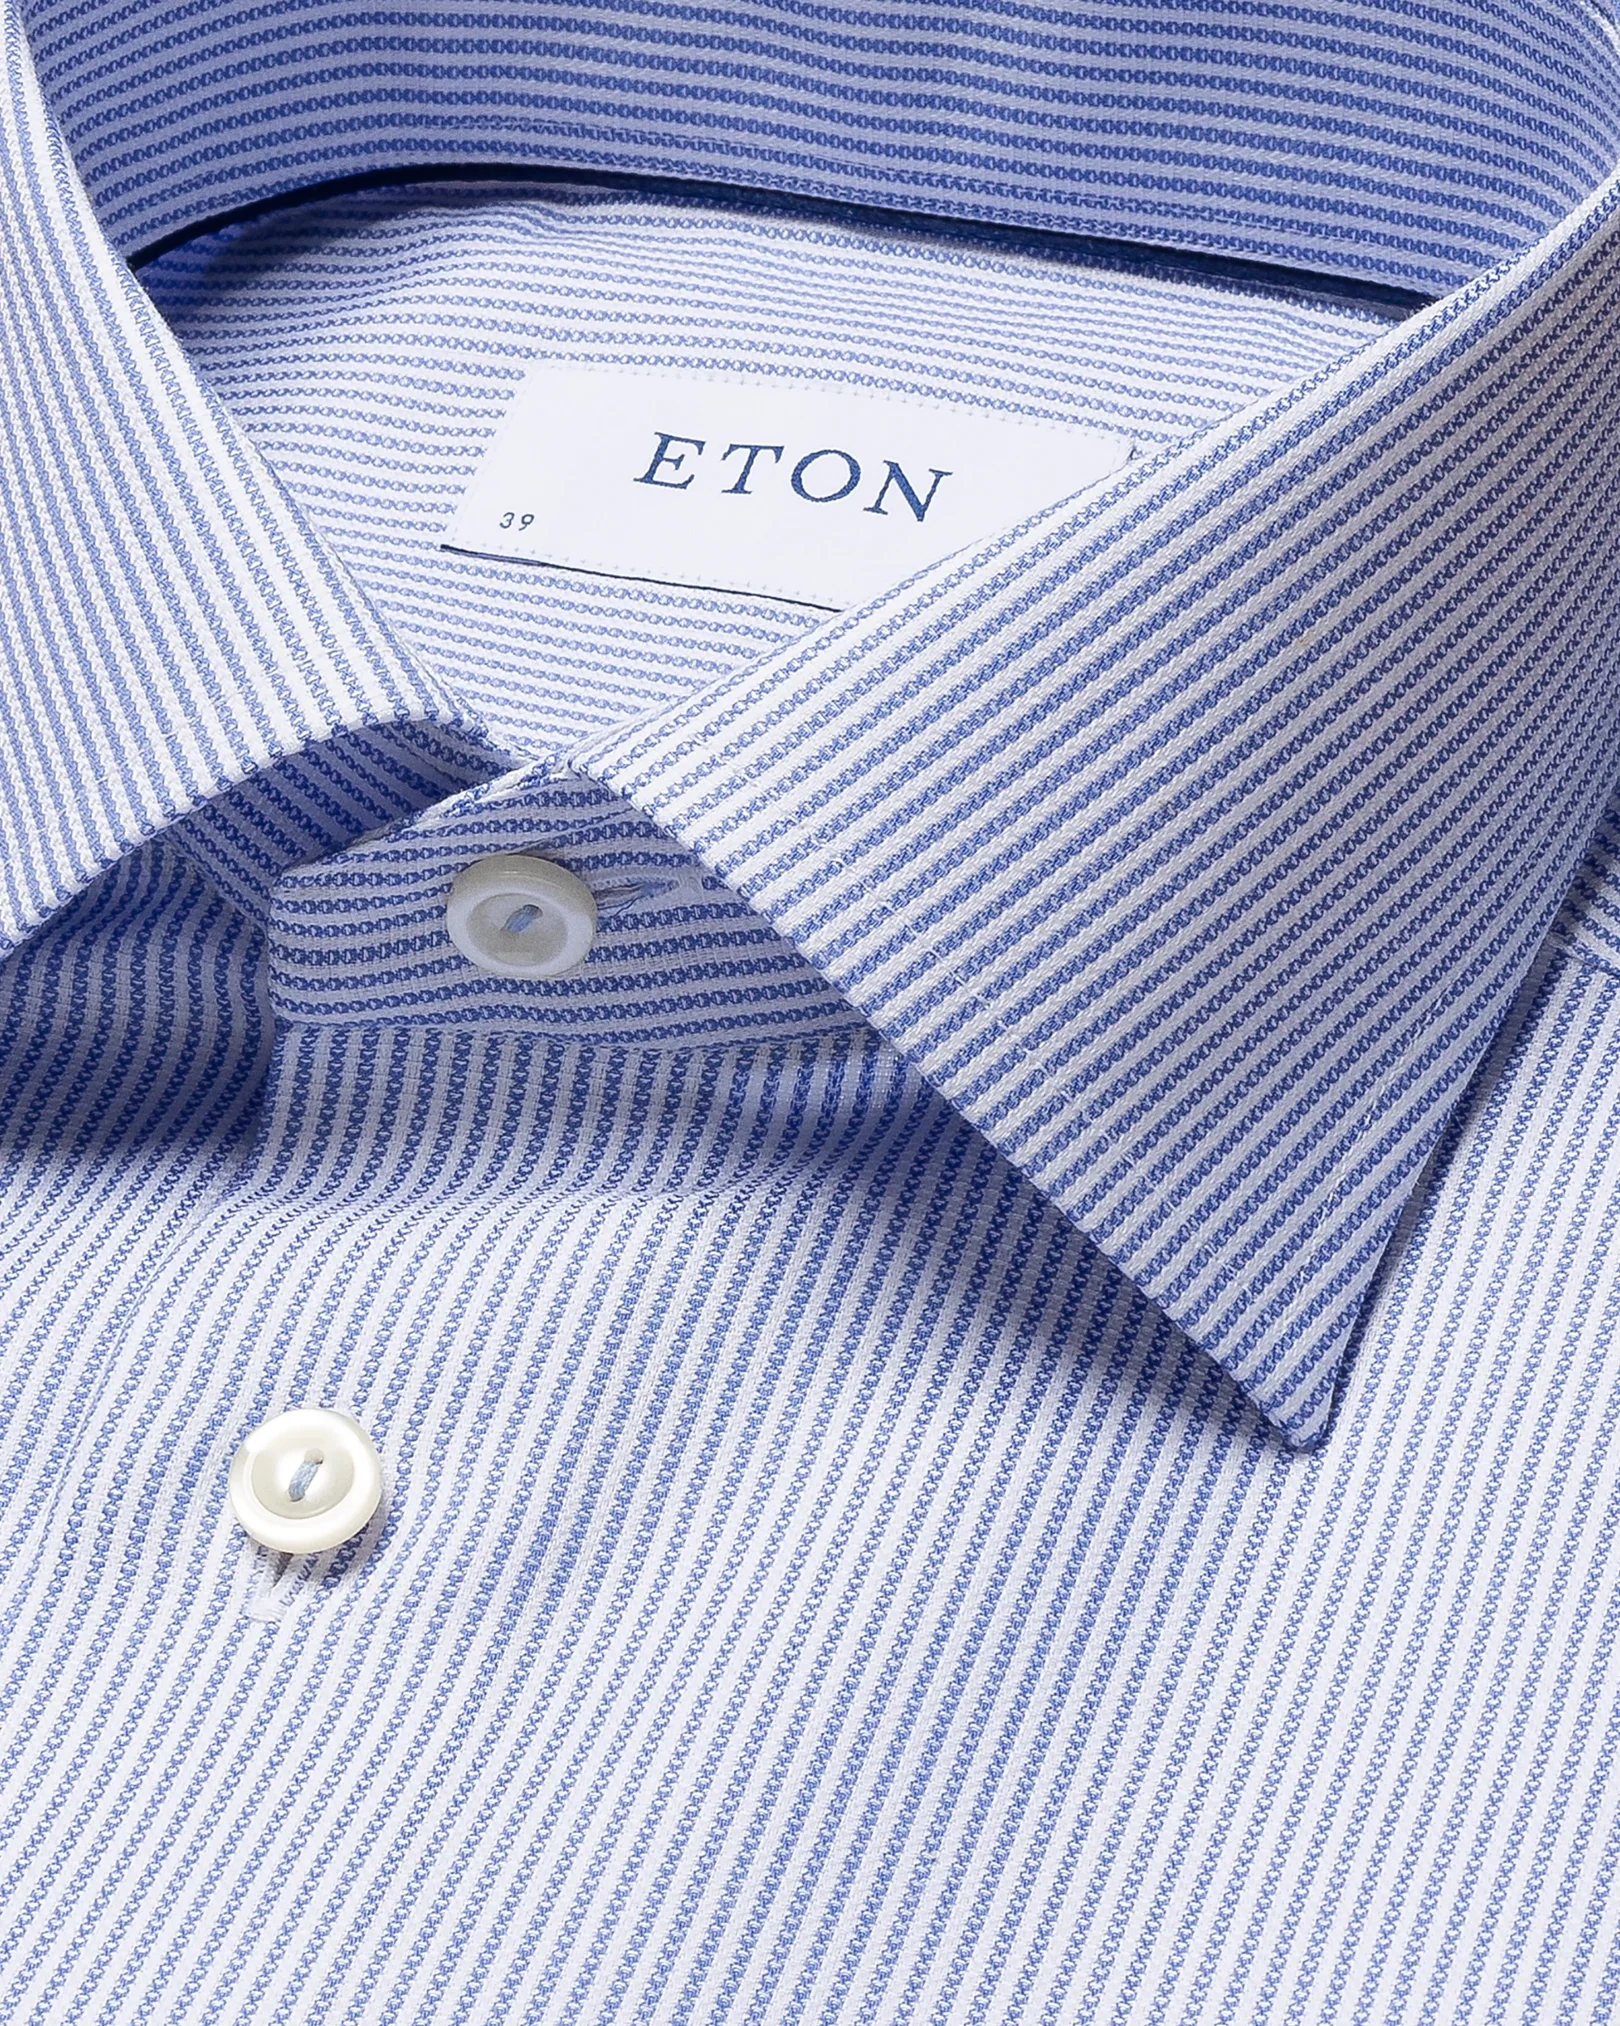 Eton - blue micro print shirt